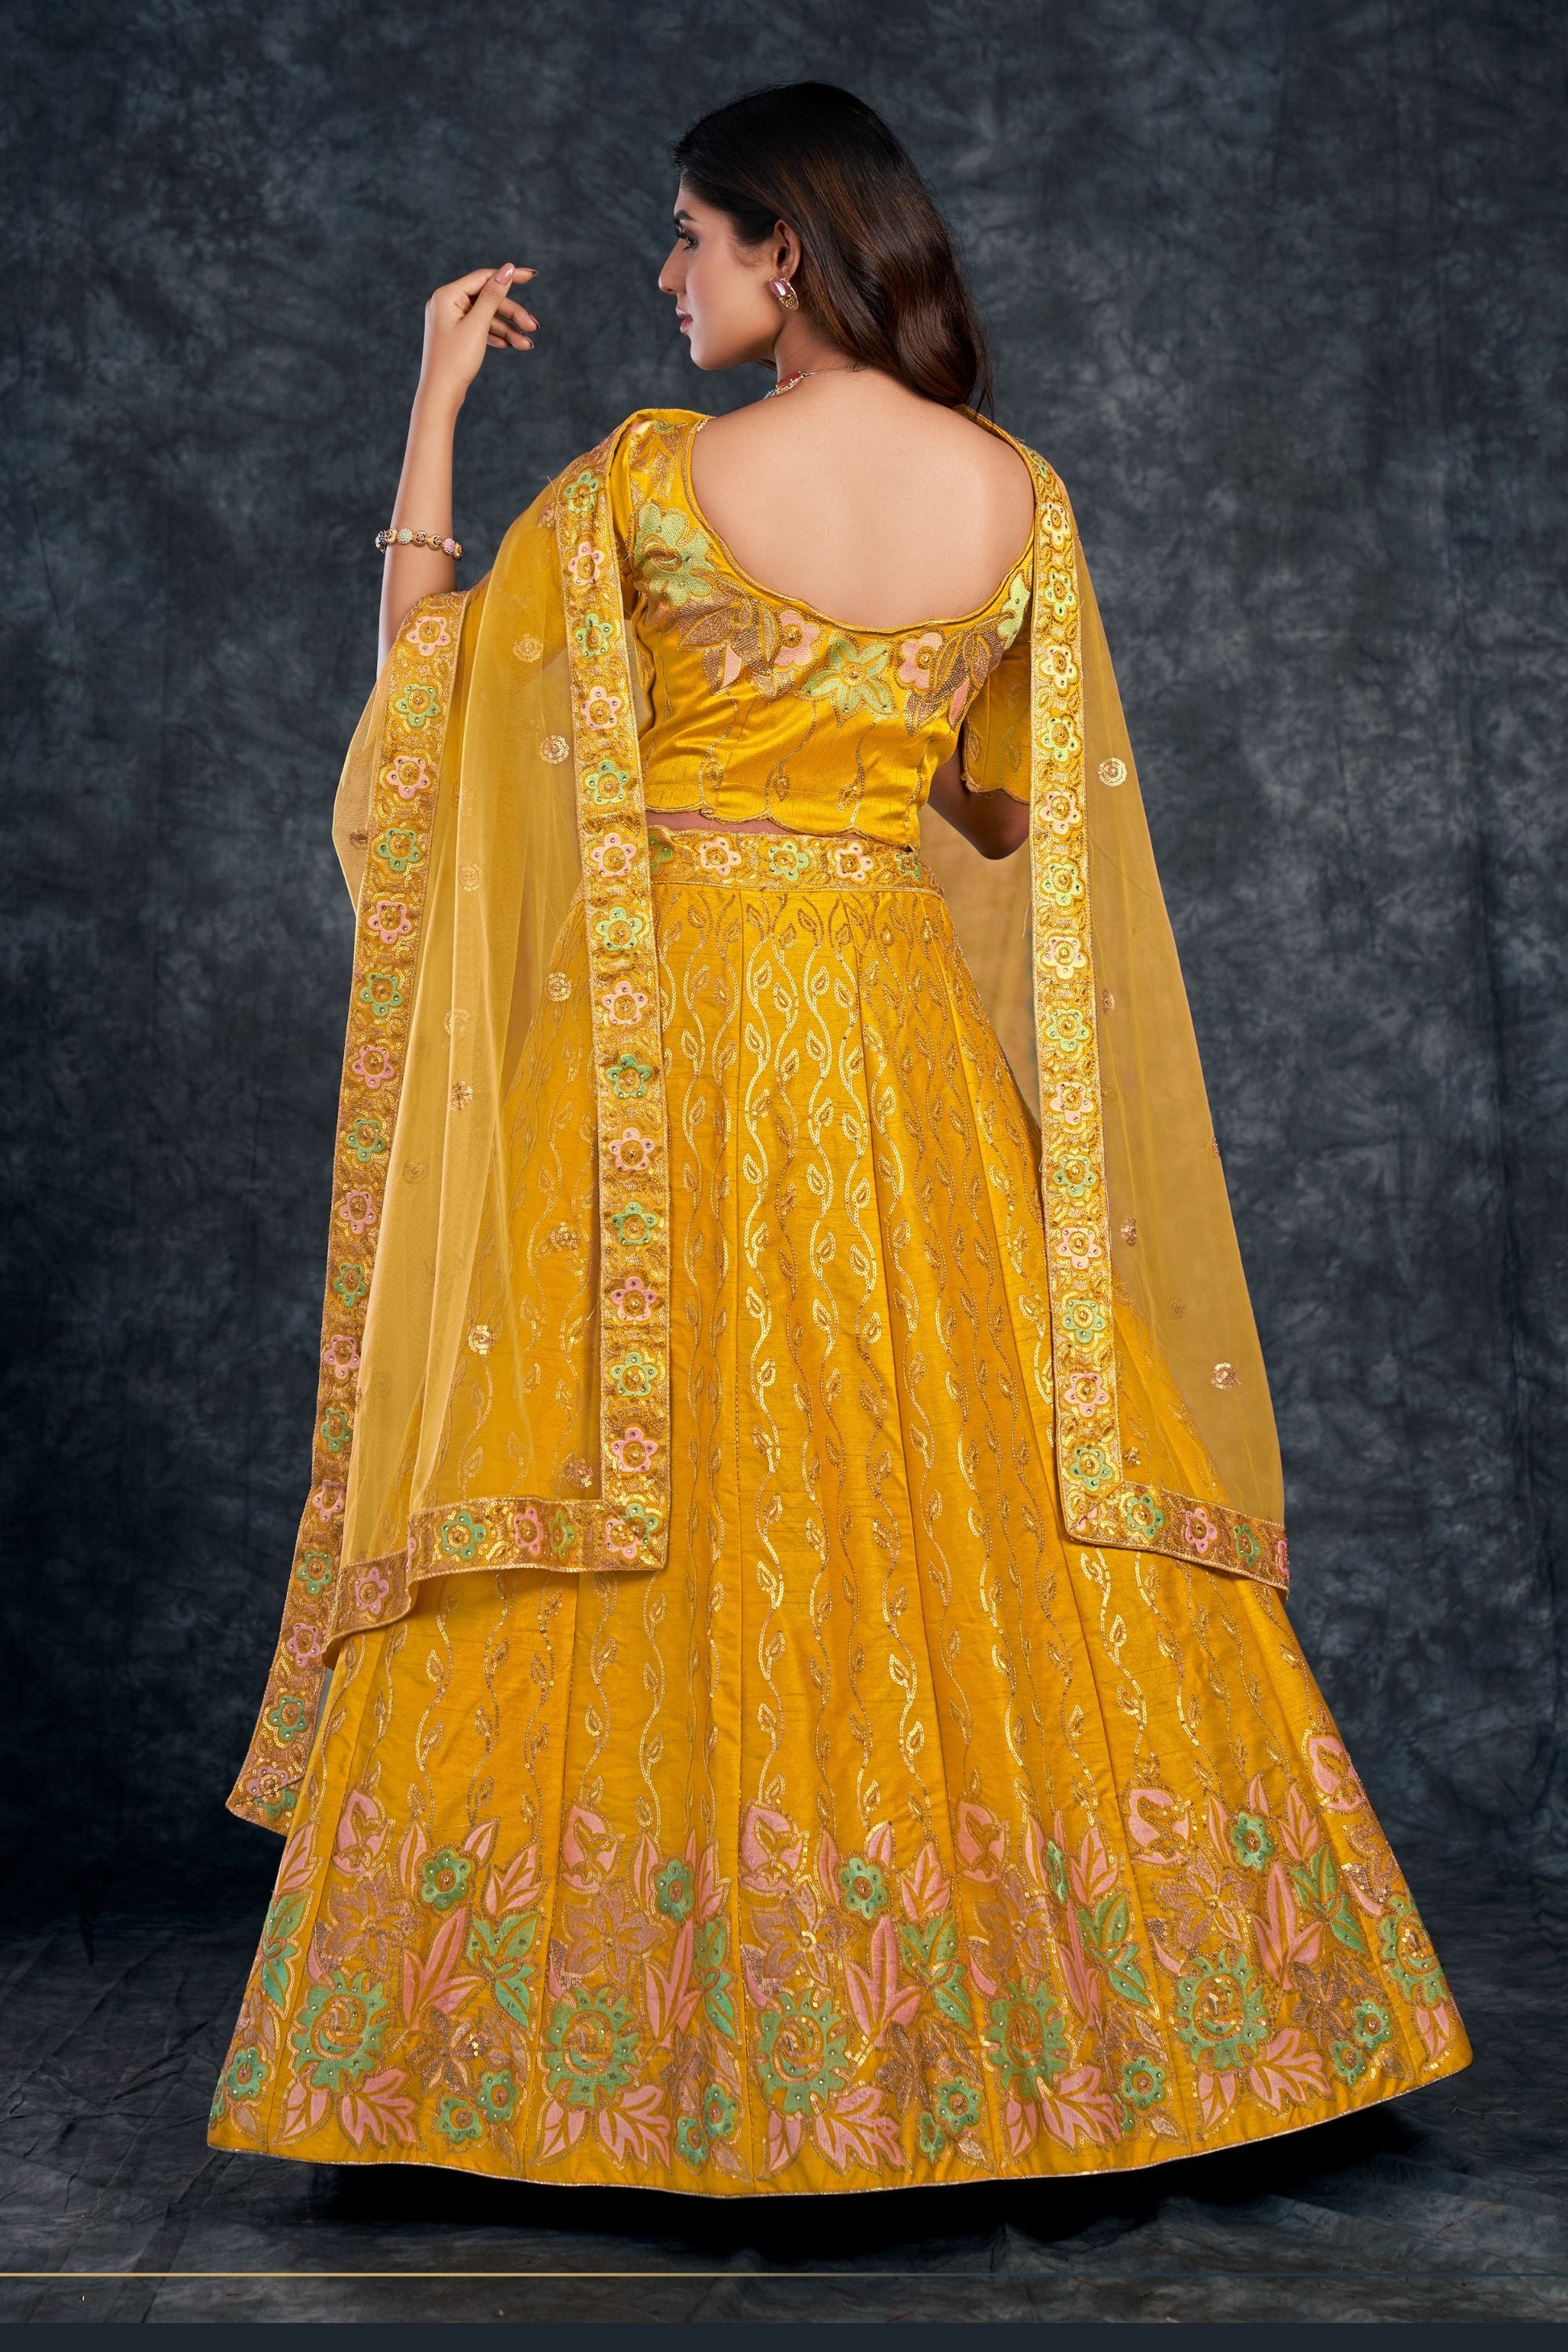 Yellow Pakistani Silk Lehenga Choli For Indian Festivals & Weddings - Sequence Embroidery Work, Thread Embroidery Work, Stone Work, Zari Work